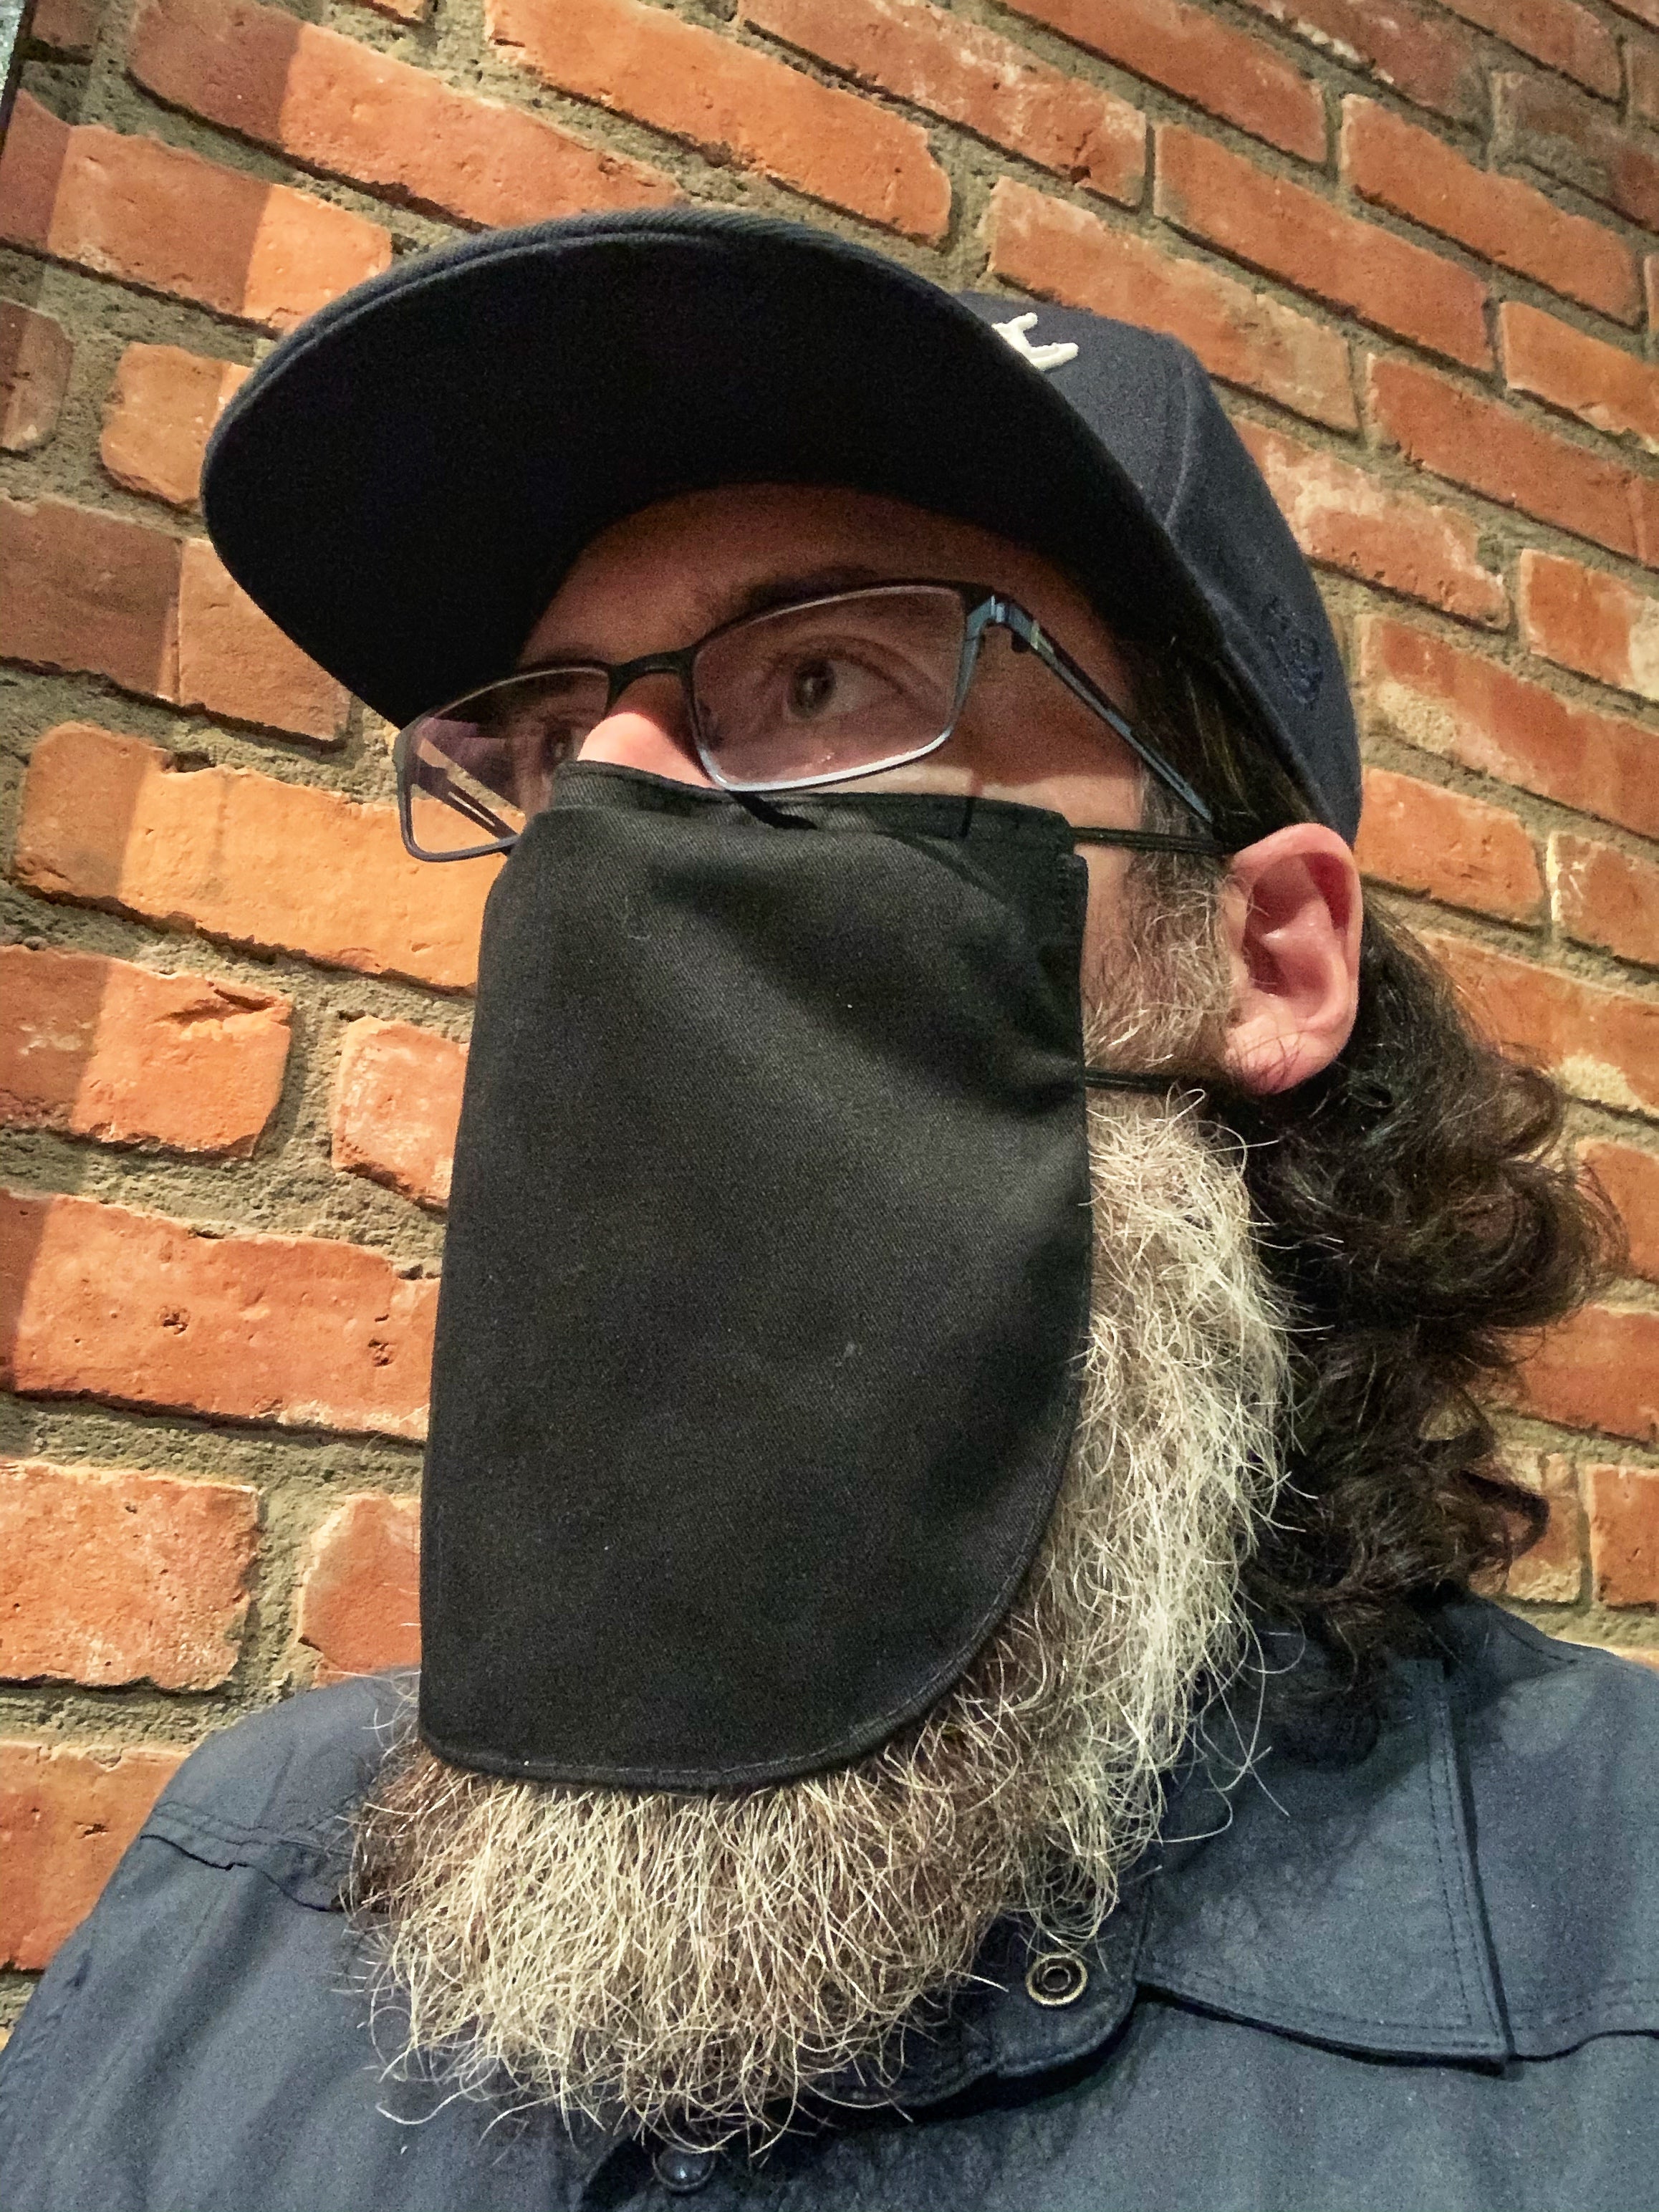 Beard Kilt (Black) Beard Mask